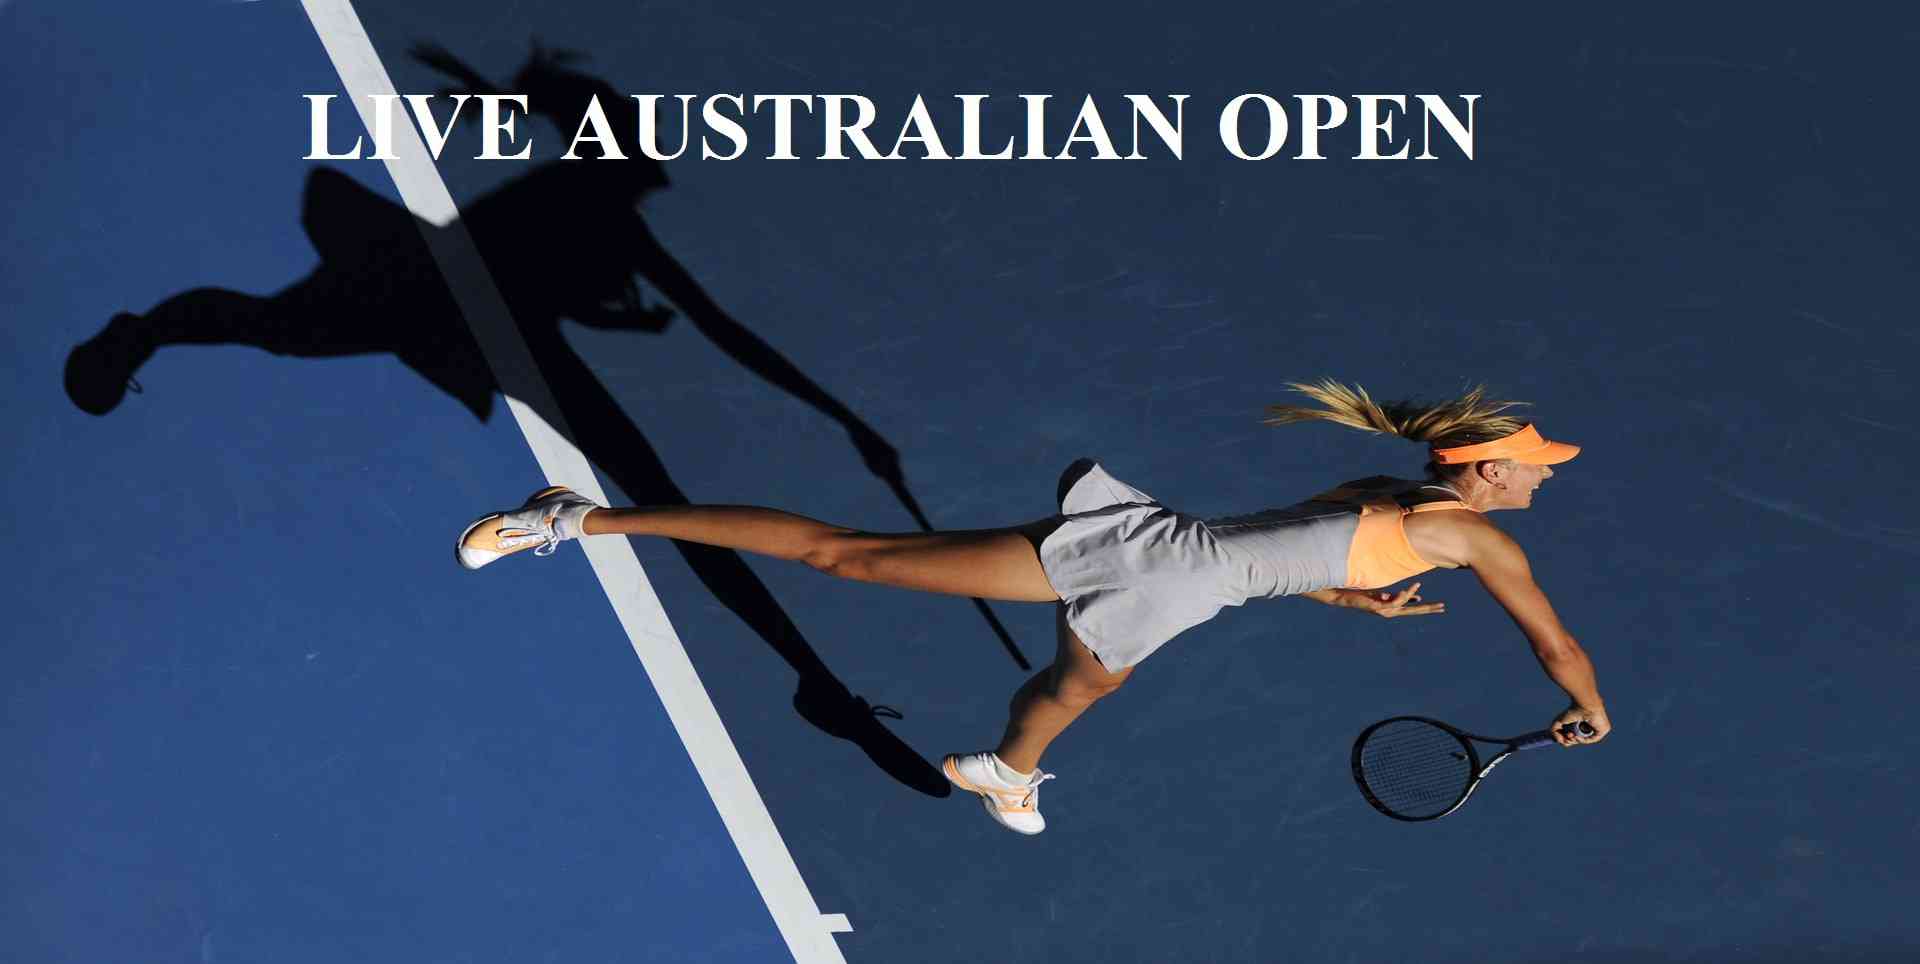 2018 Australian Open openning ceremony